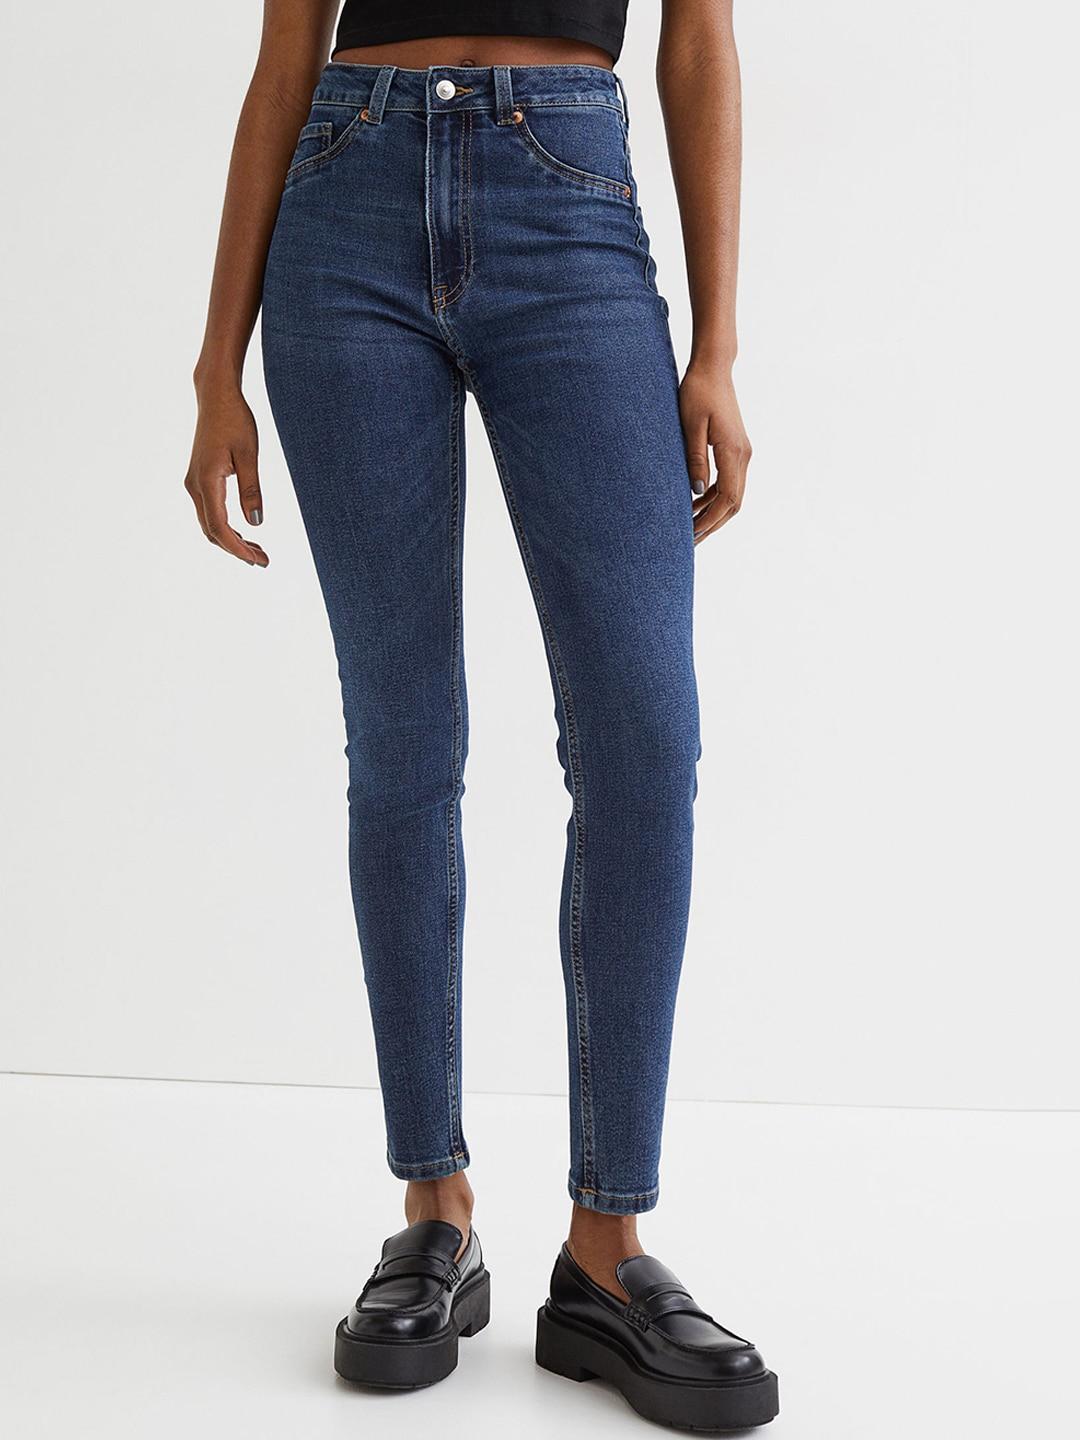 H&M Women Blue Skinny High Jeans